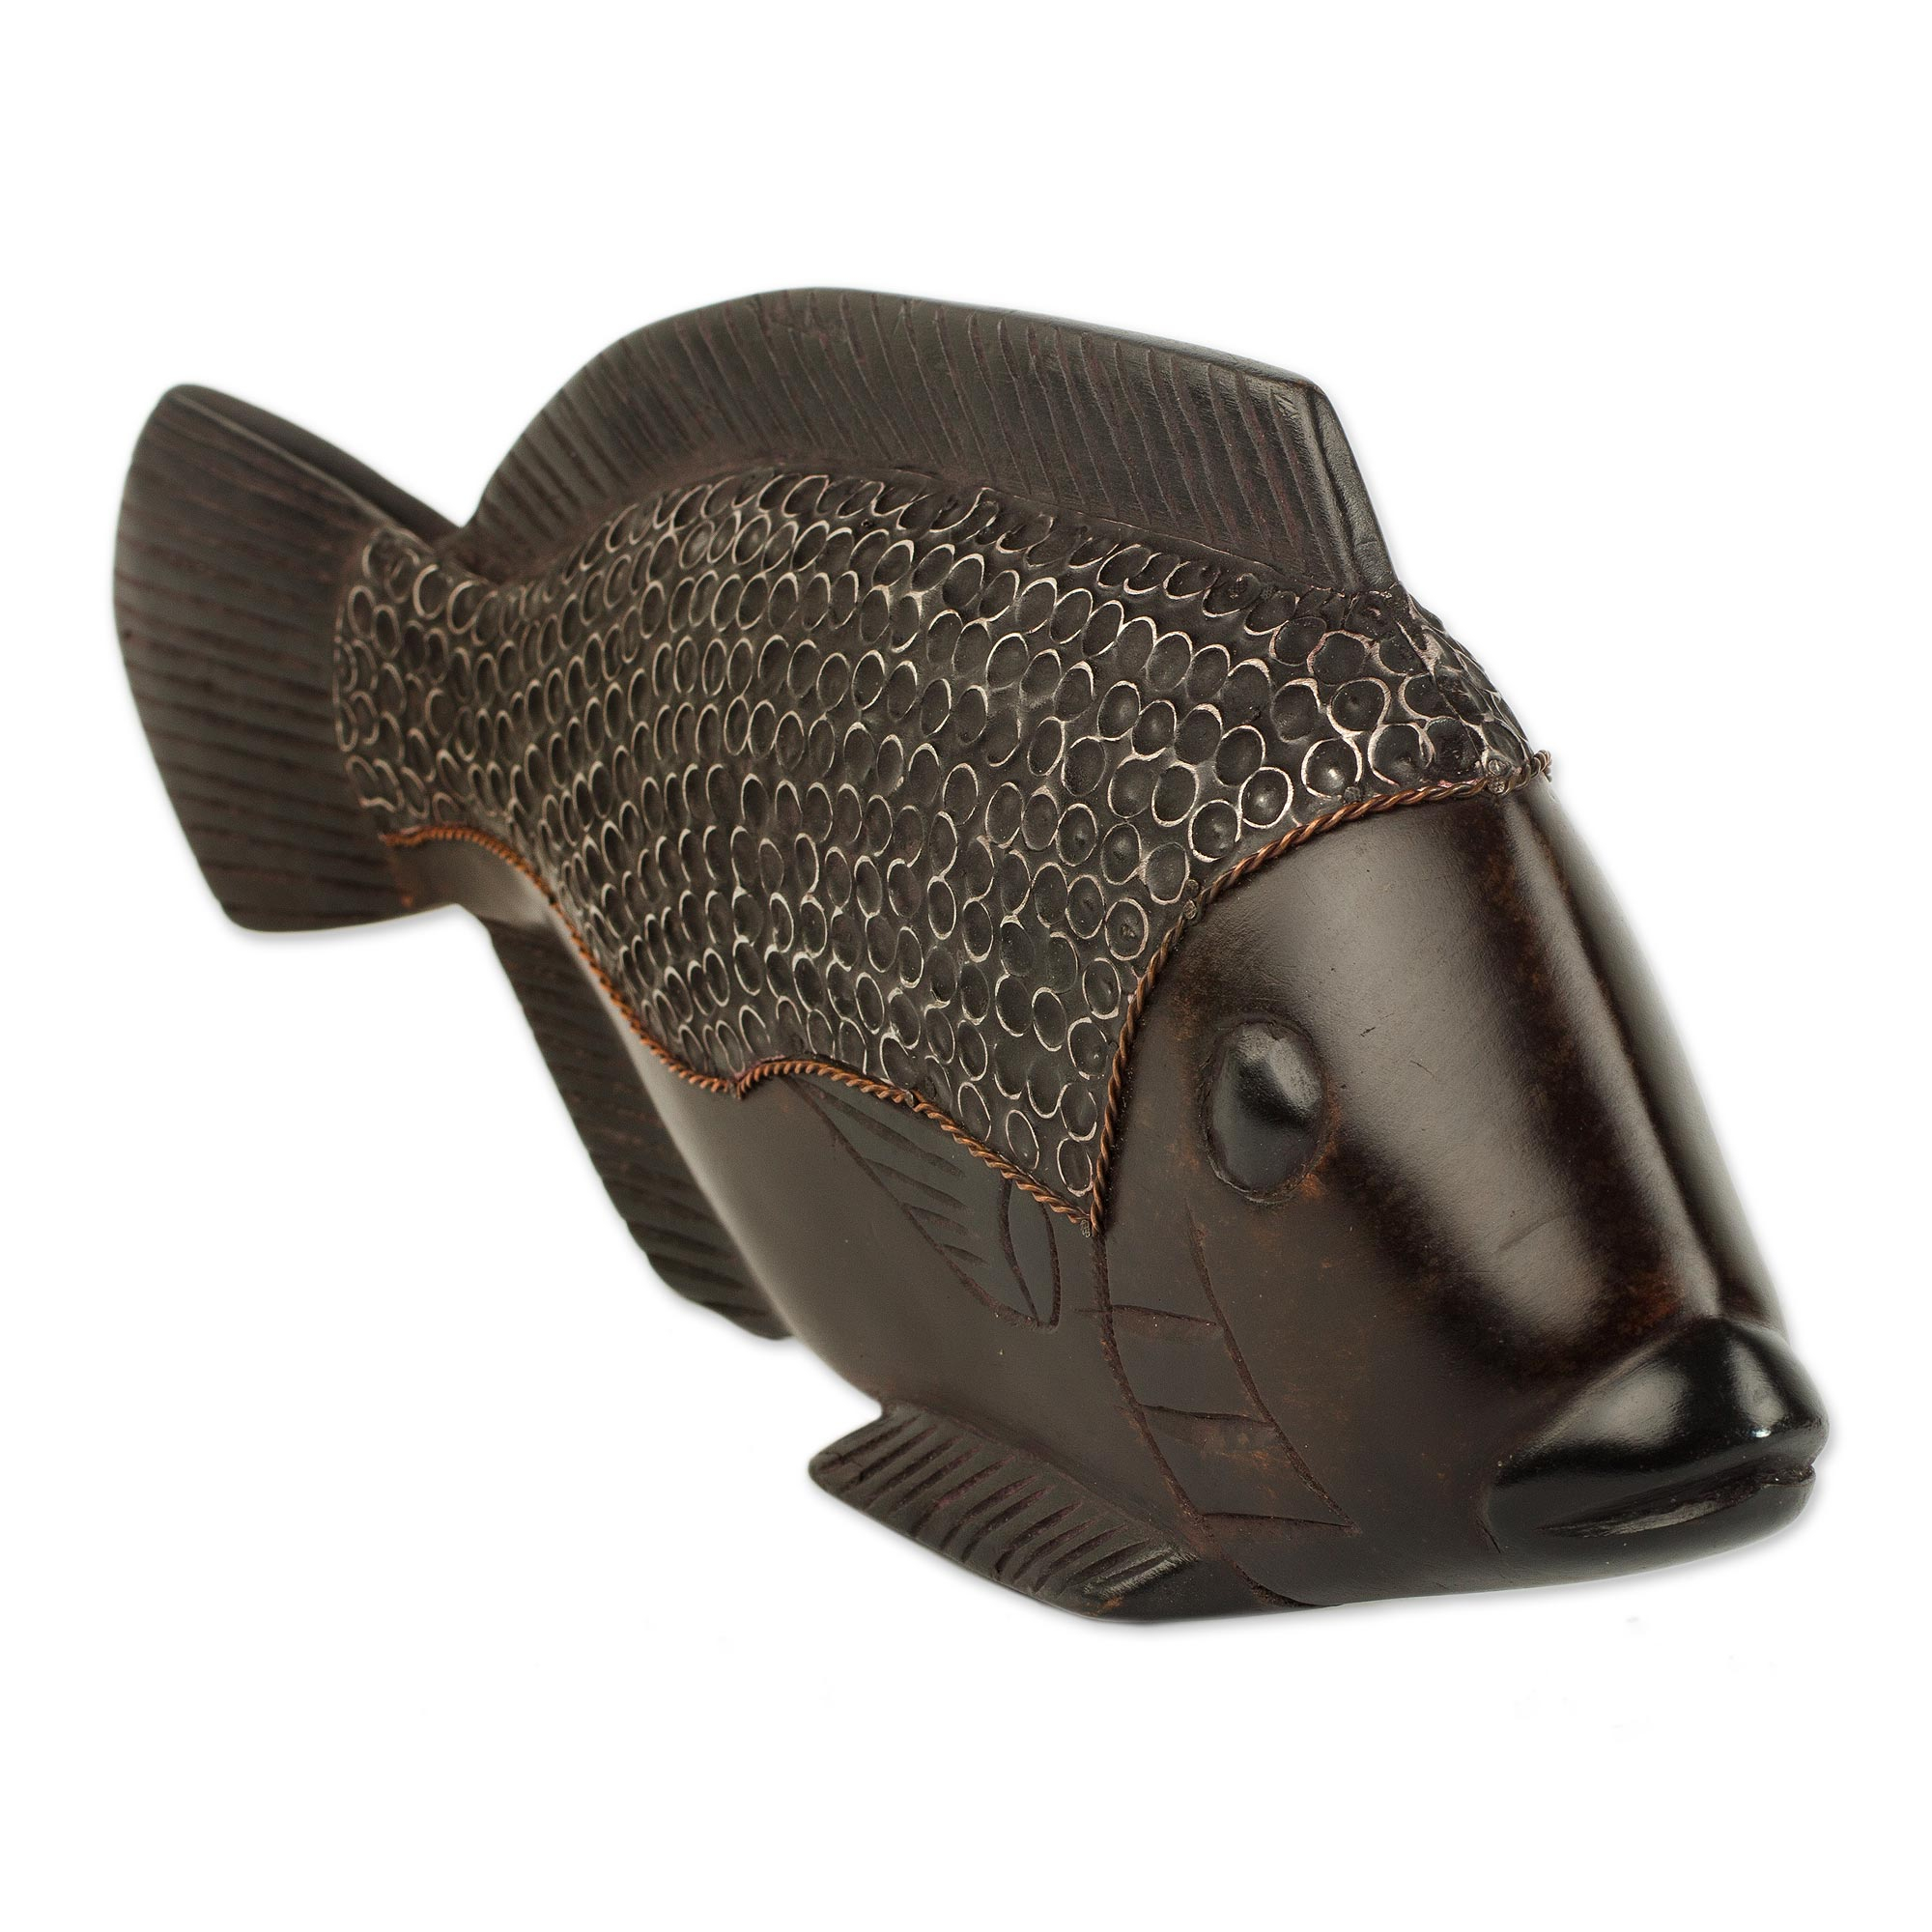 UNICEF Market | Original Hand Carved Wood Fish Sculpture - African Fish